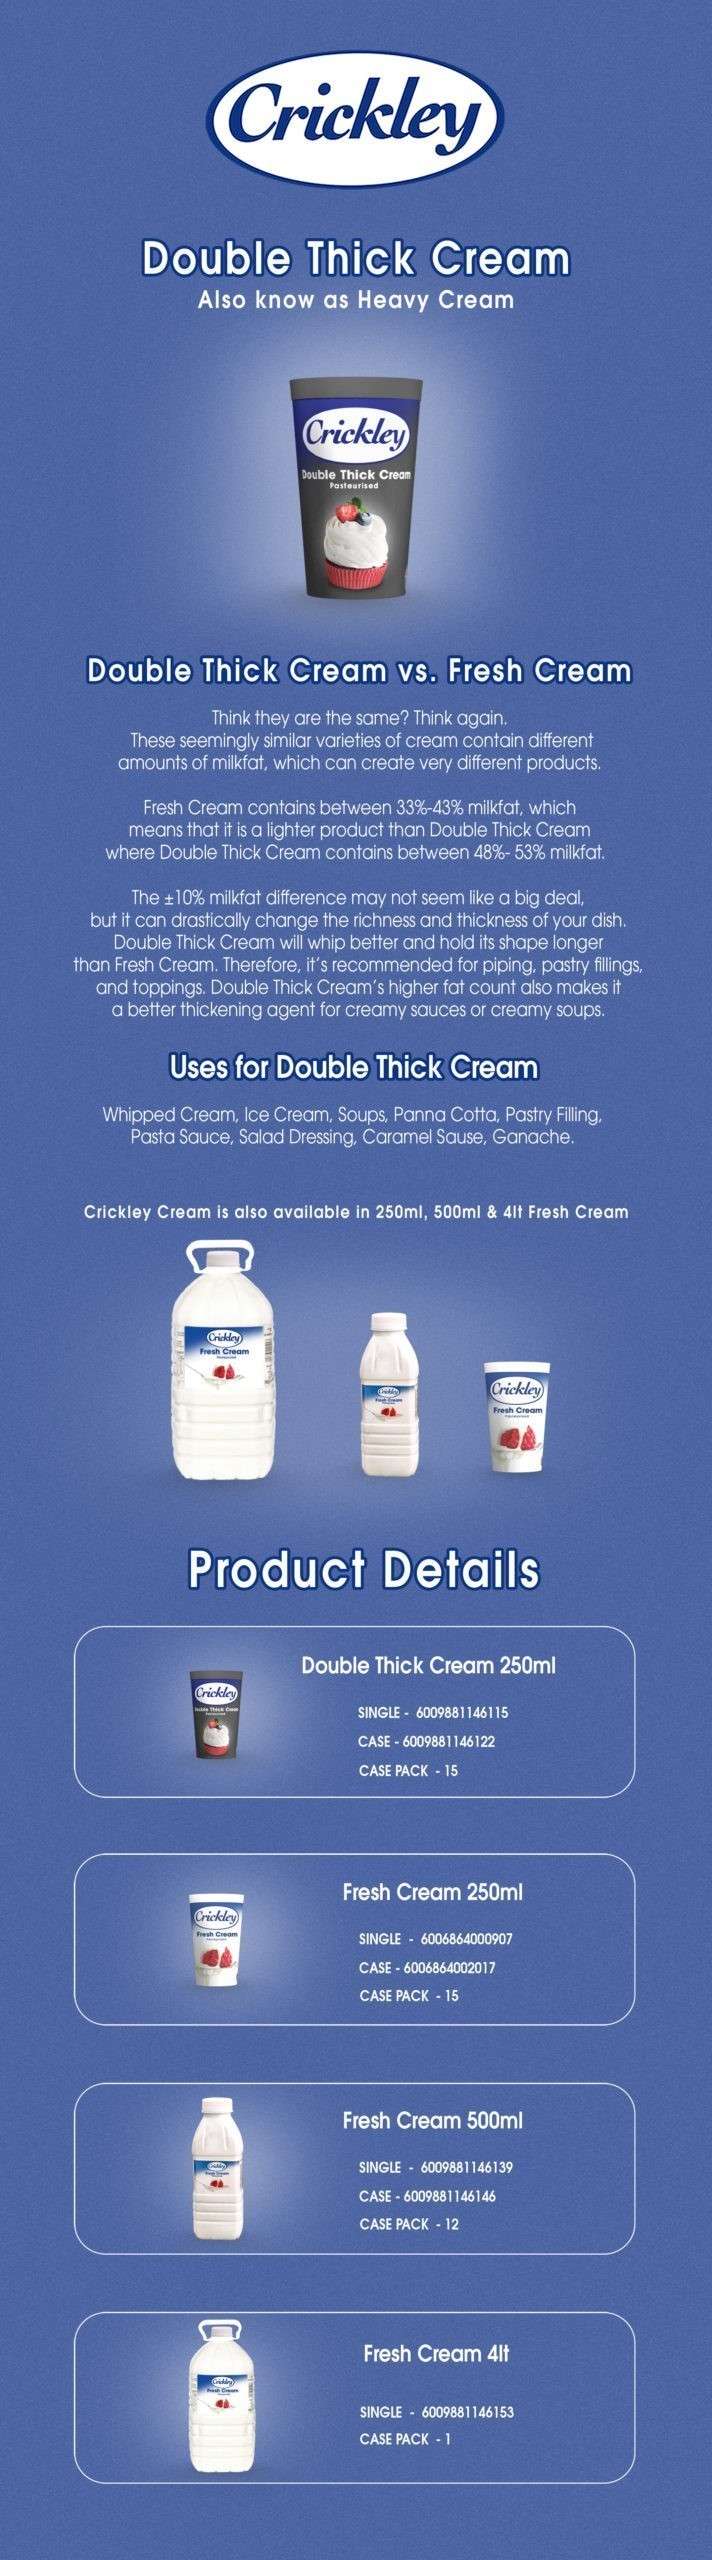 Best Dairy Cream in South Africa